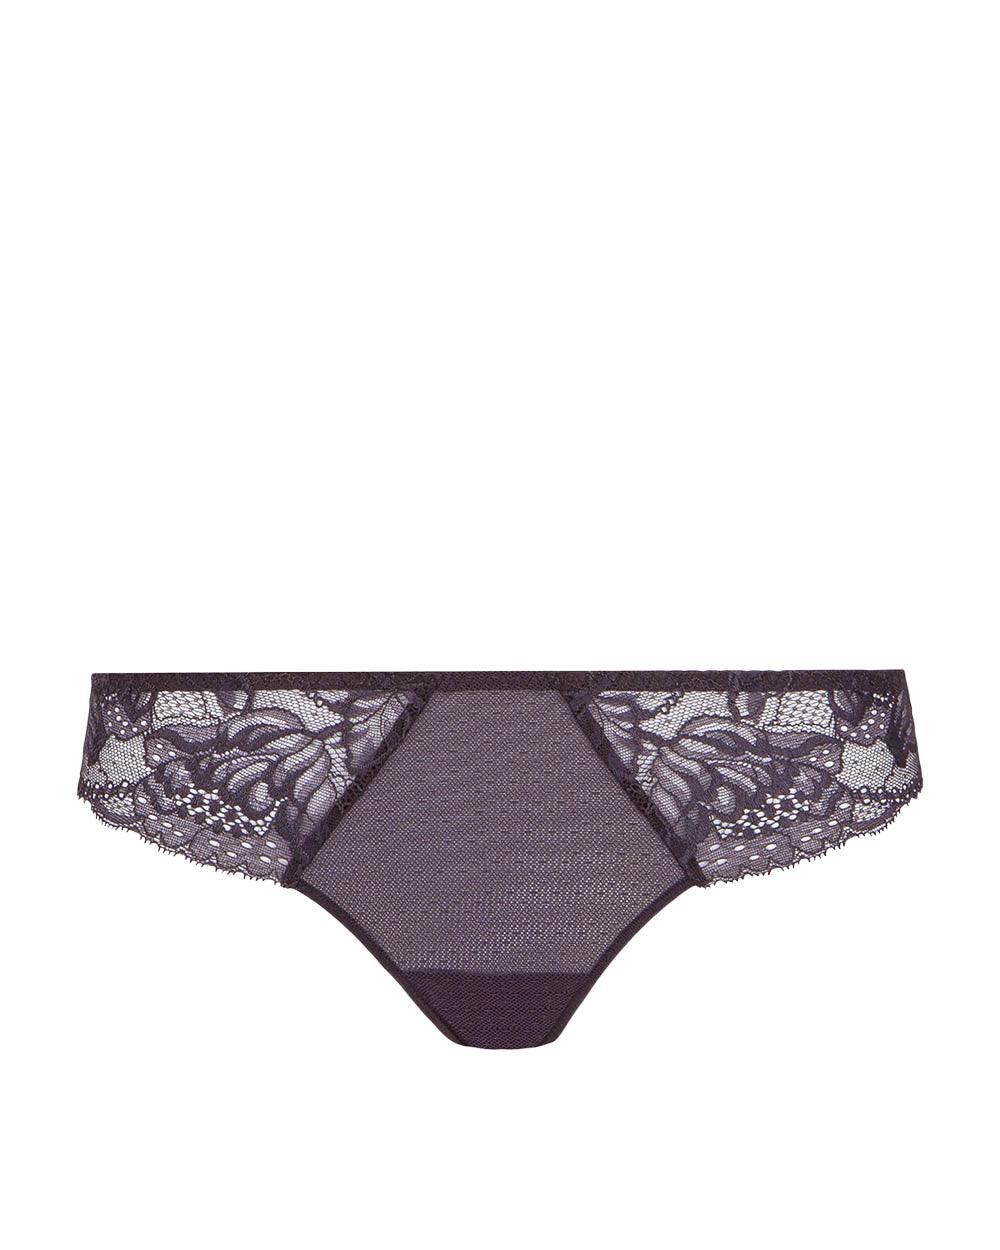 Simone Perele Polyester Panties for Women